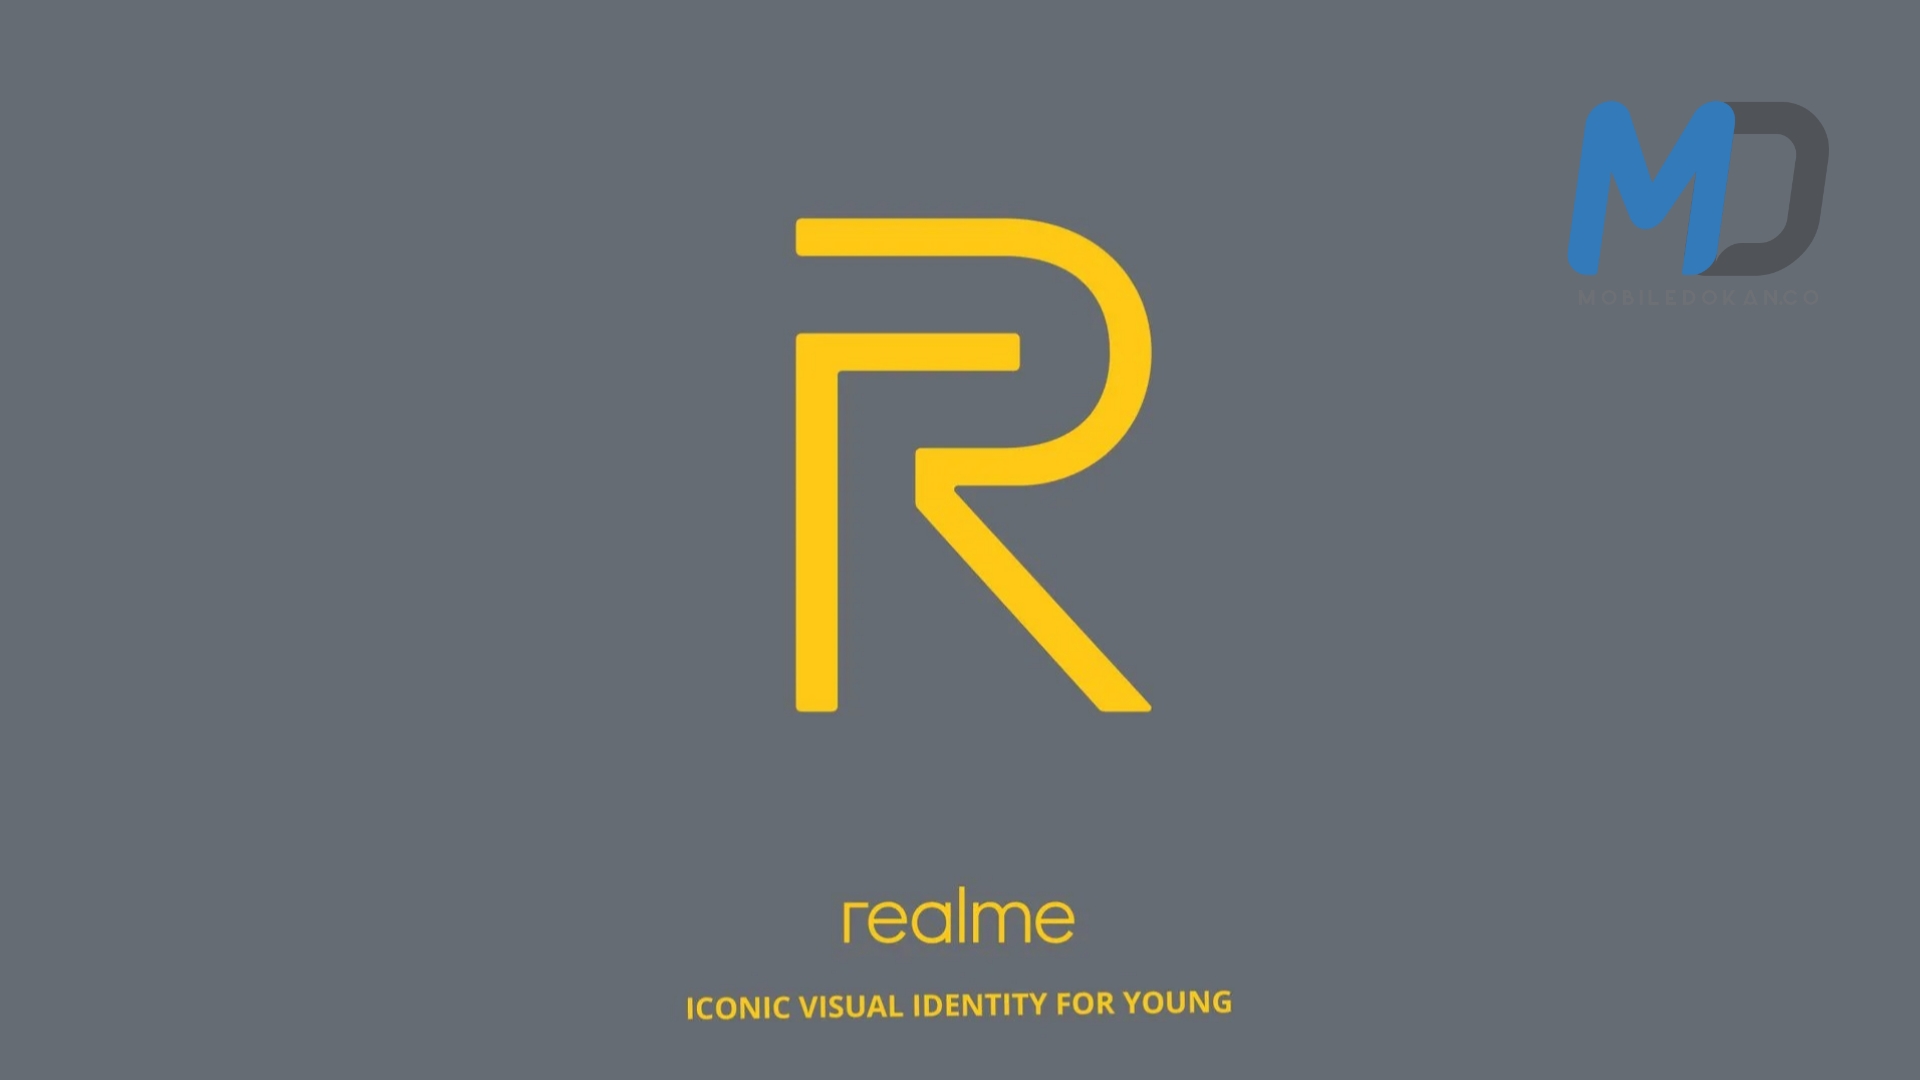 Realme has cross over 100 million users globally